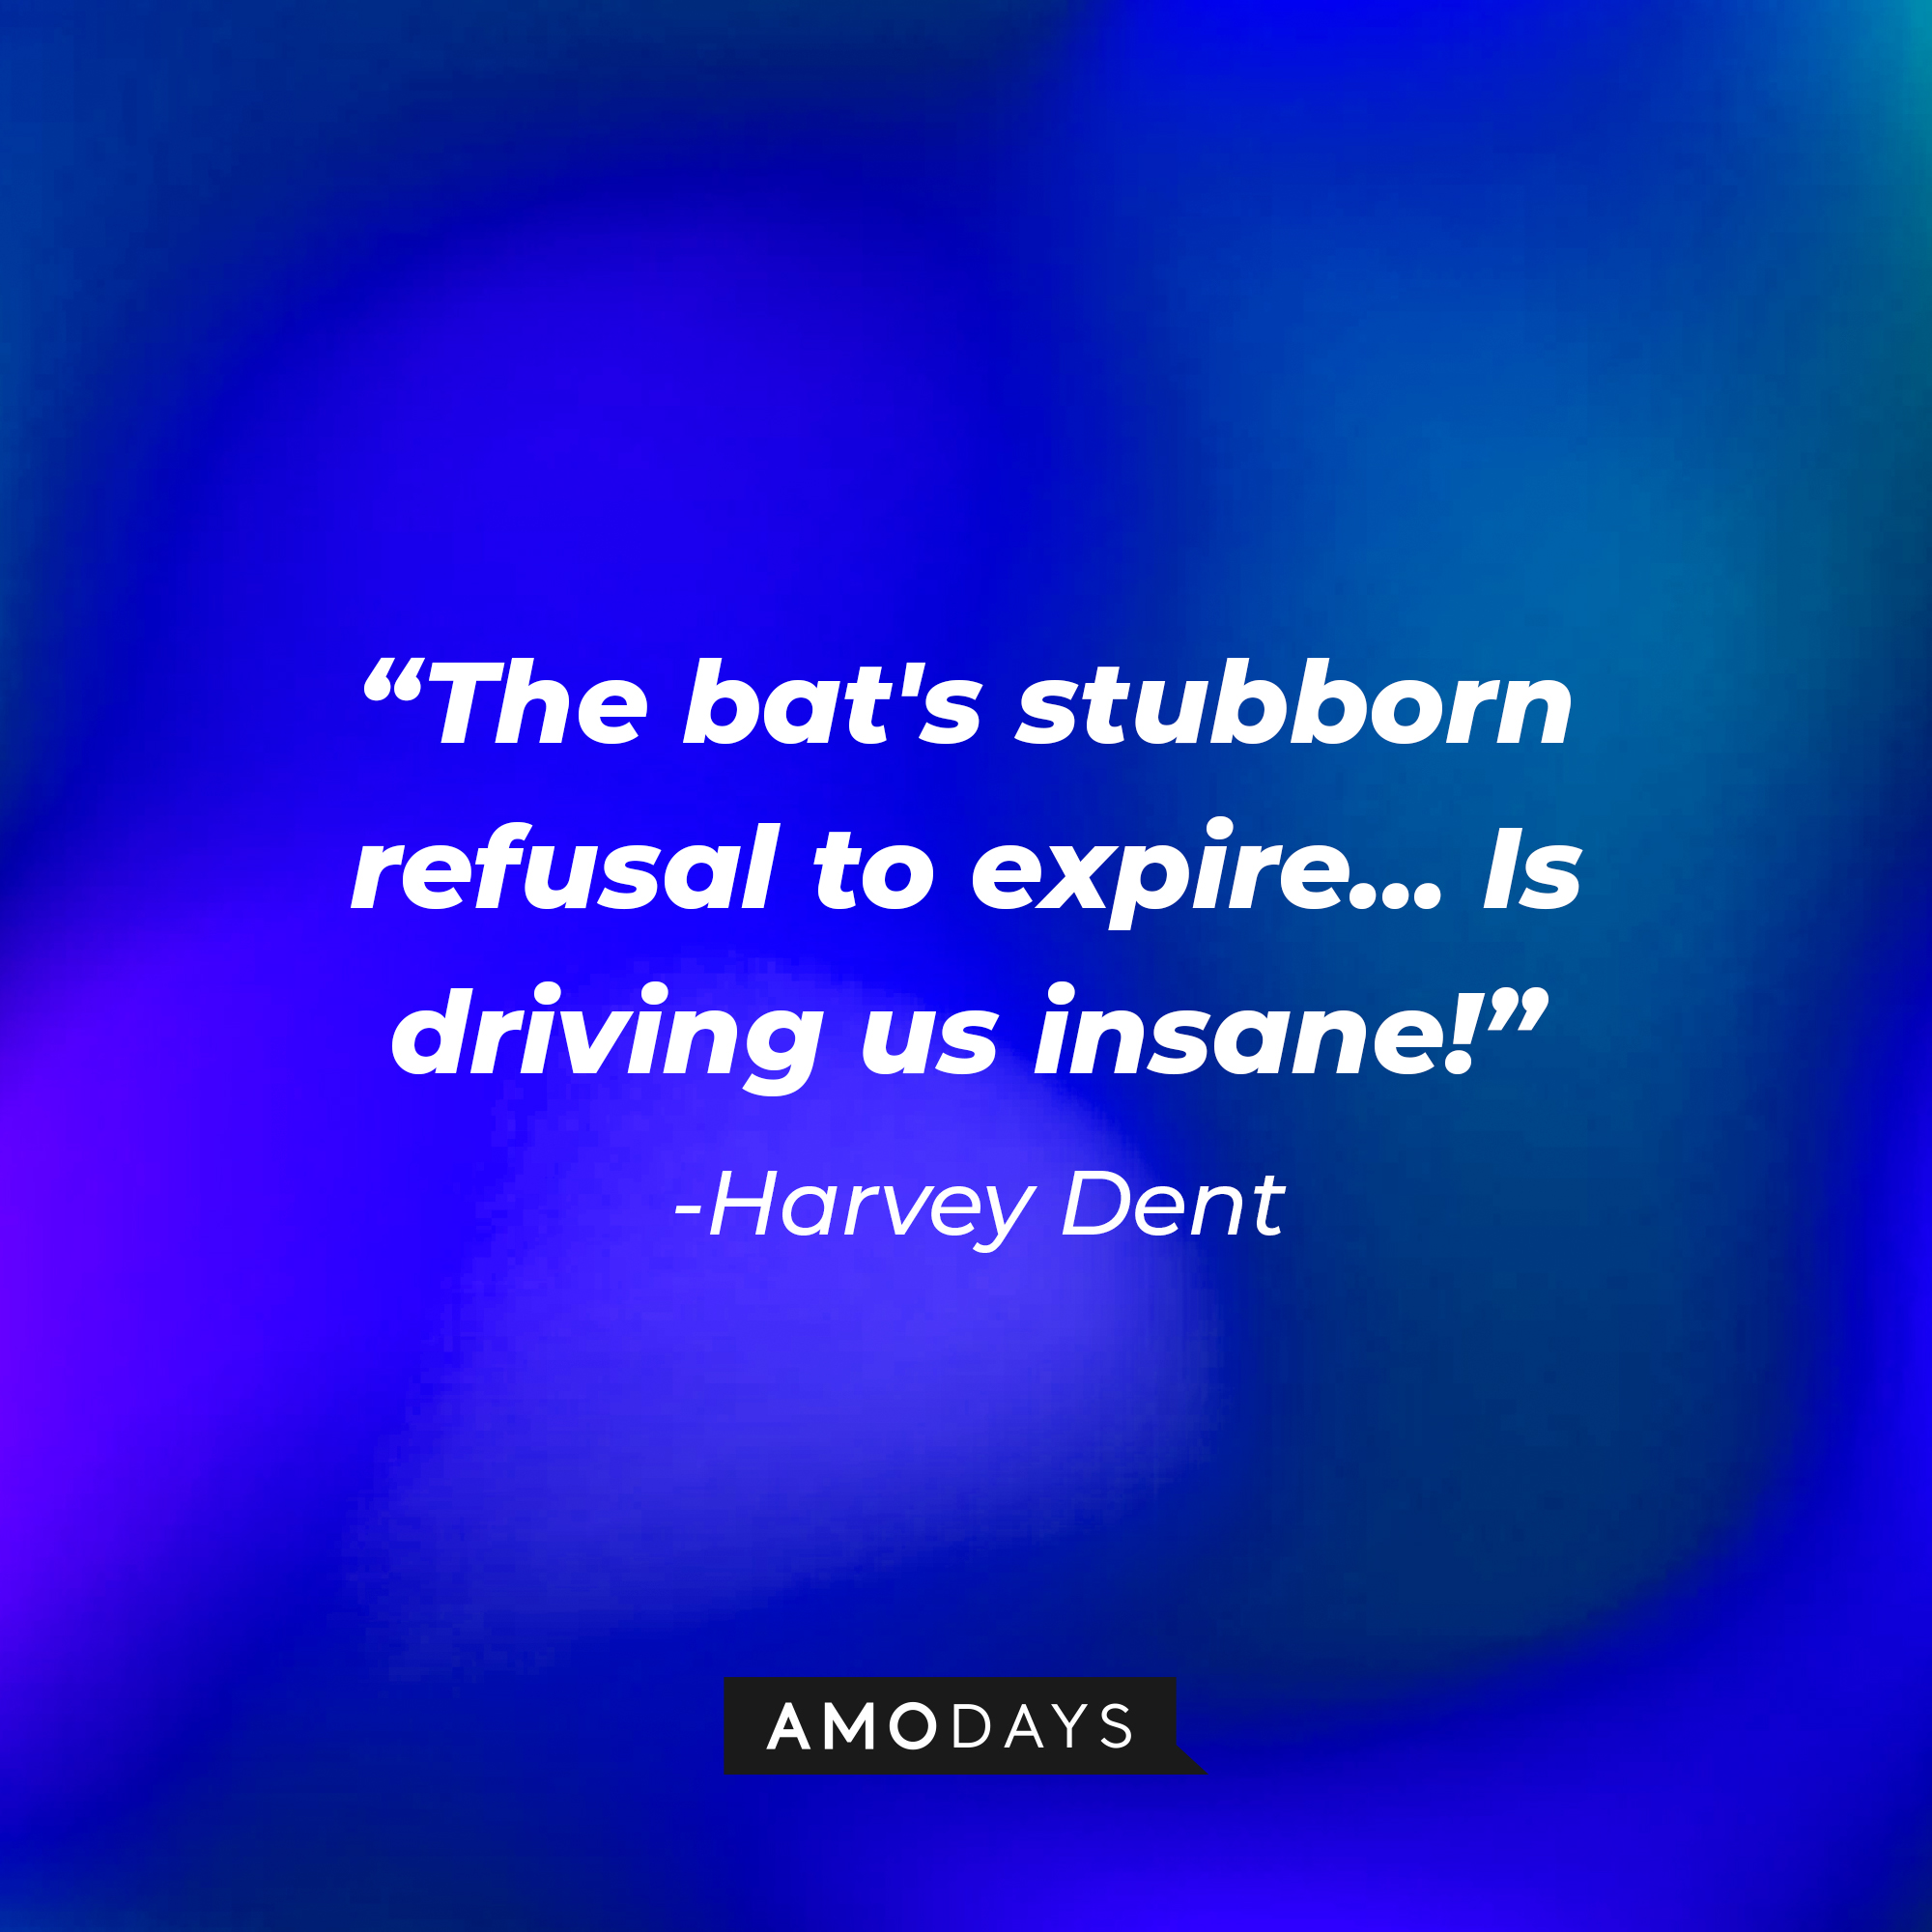 Harvey Dent's quote: “The bat's stubborn refusal to expire... Is driving us insane!” | Source: facebook.com/darkknighttrilogy